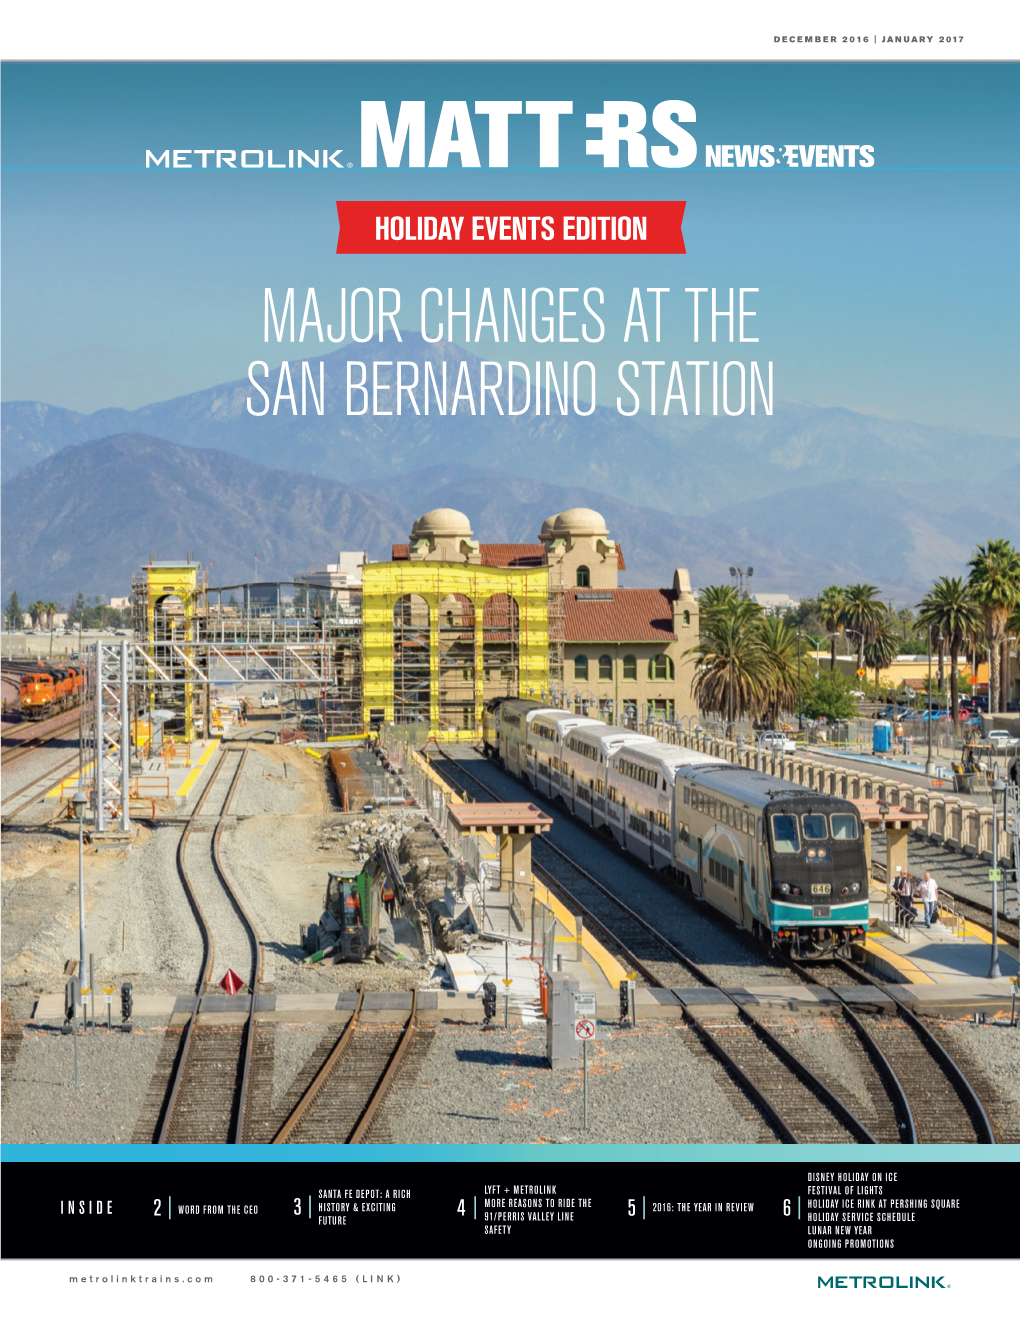 Major Changes at the San Bernardino Station